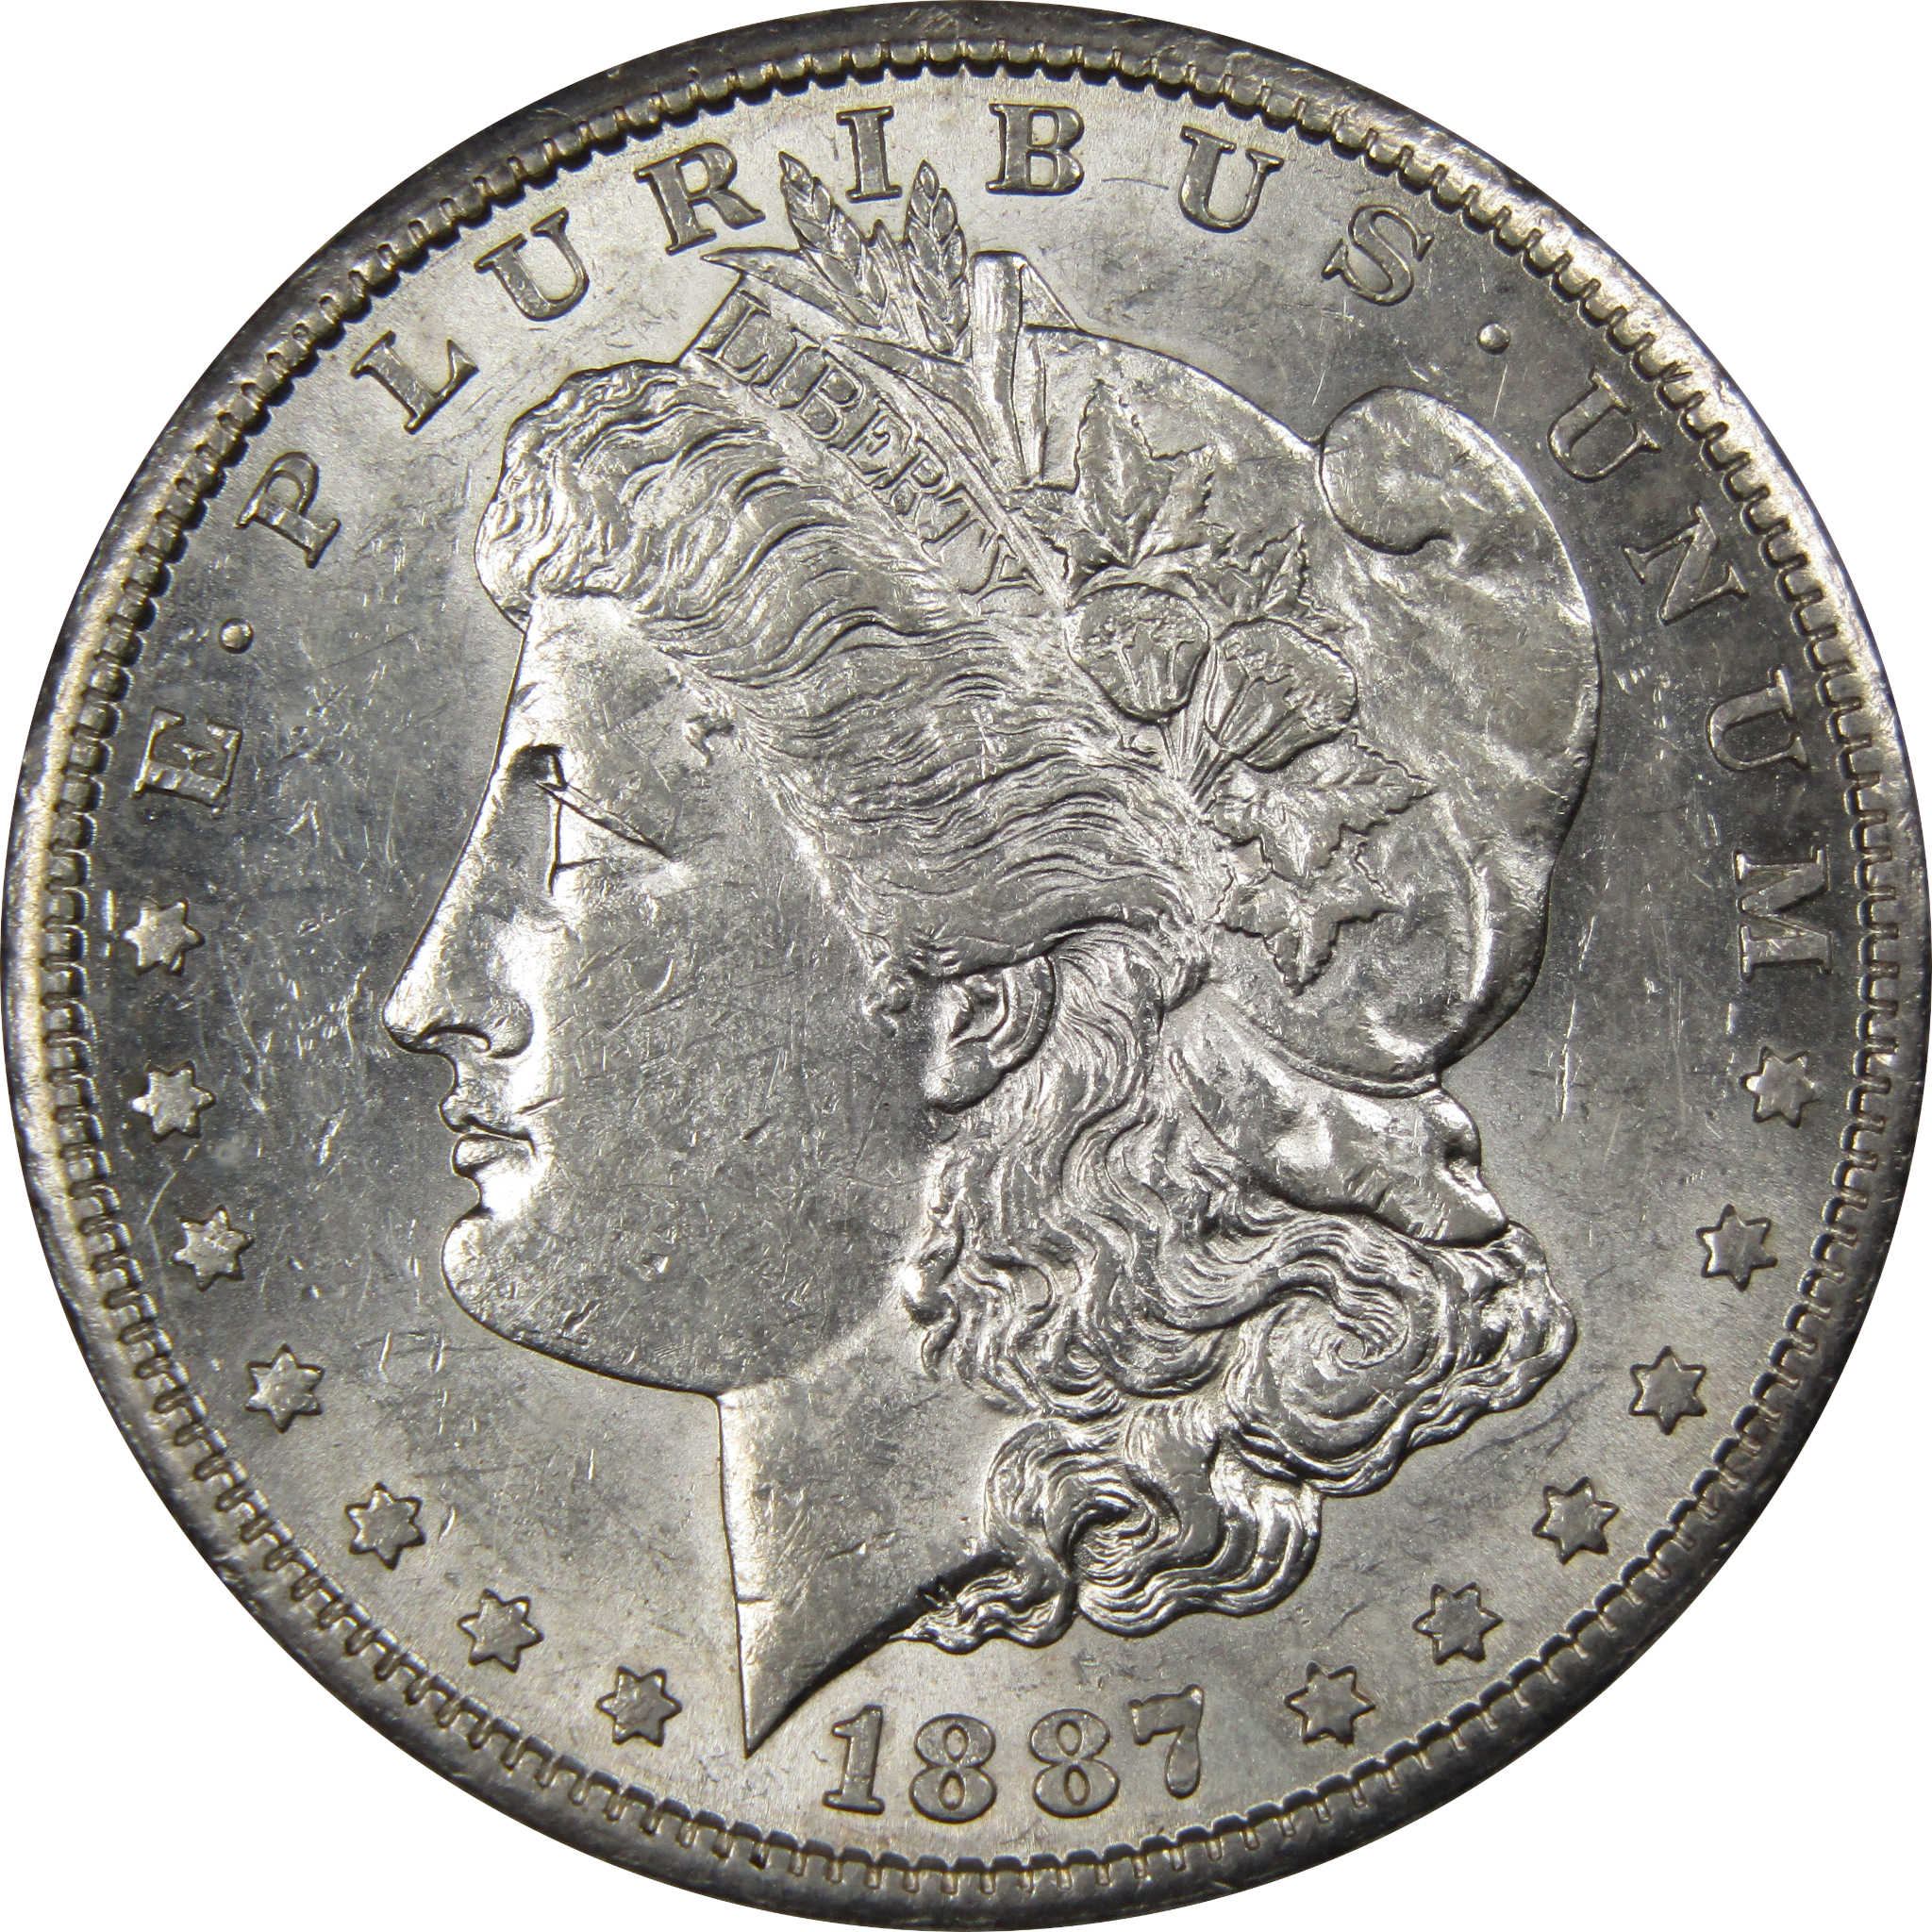 1887 S Morgan Dollar CH AU Choice About Uncirculated Silver SKU:I1871 - Morgan coin - Morgan silver dollar - Morgan silver dollar for sale - Profile Coins &amp; Collectibles